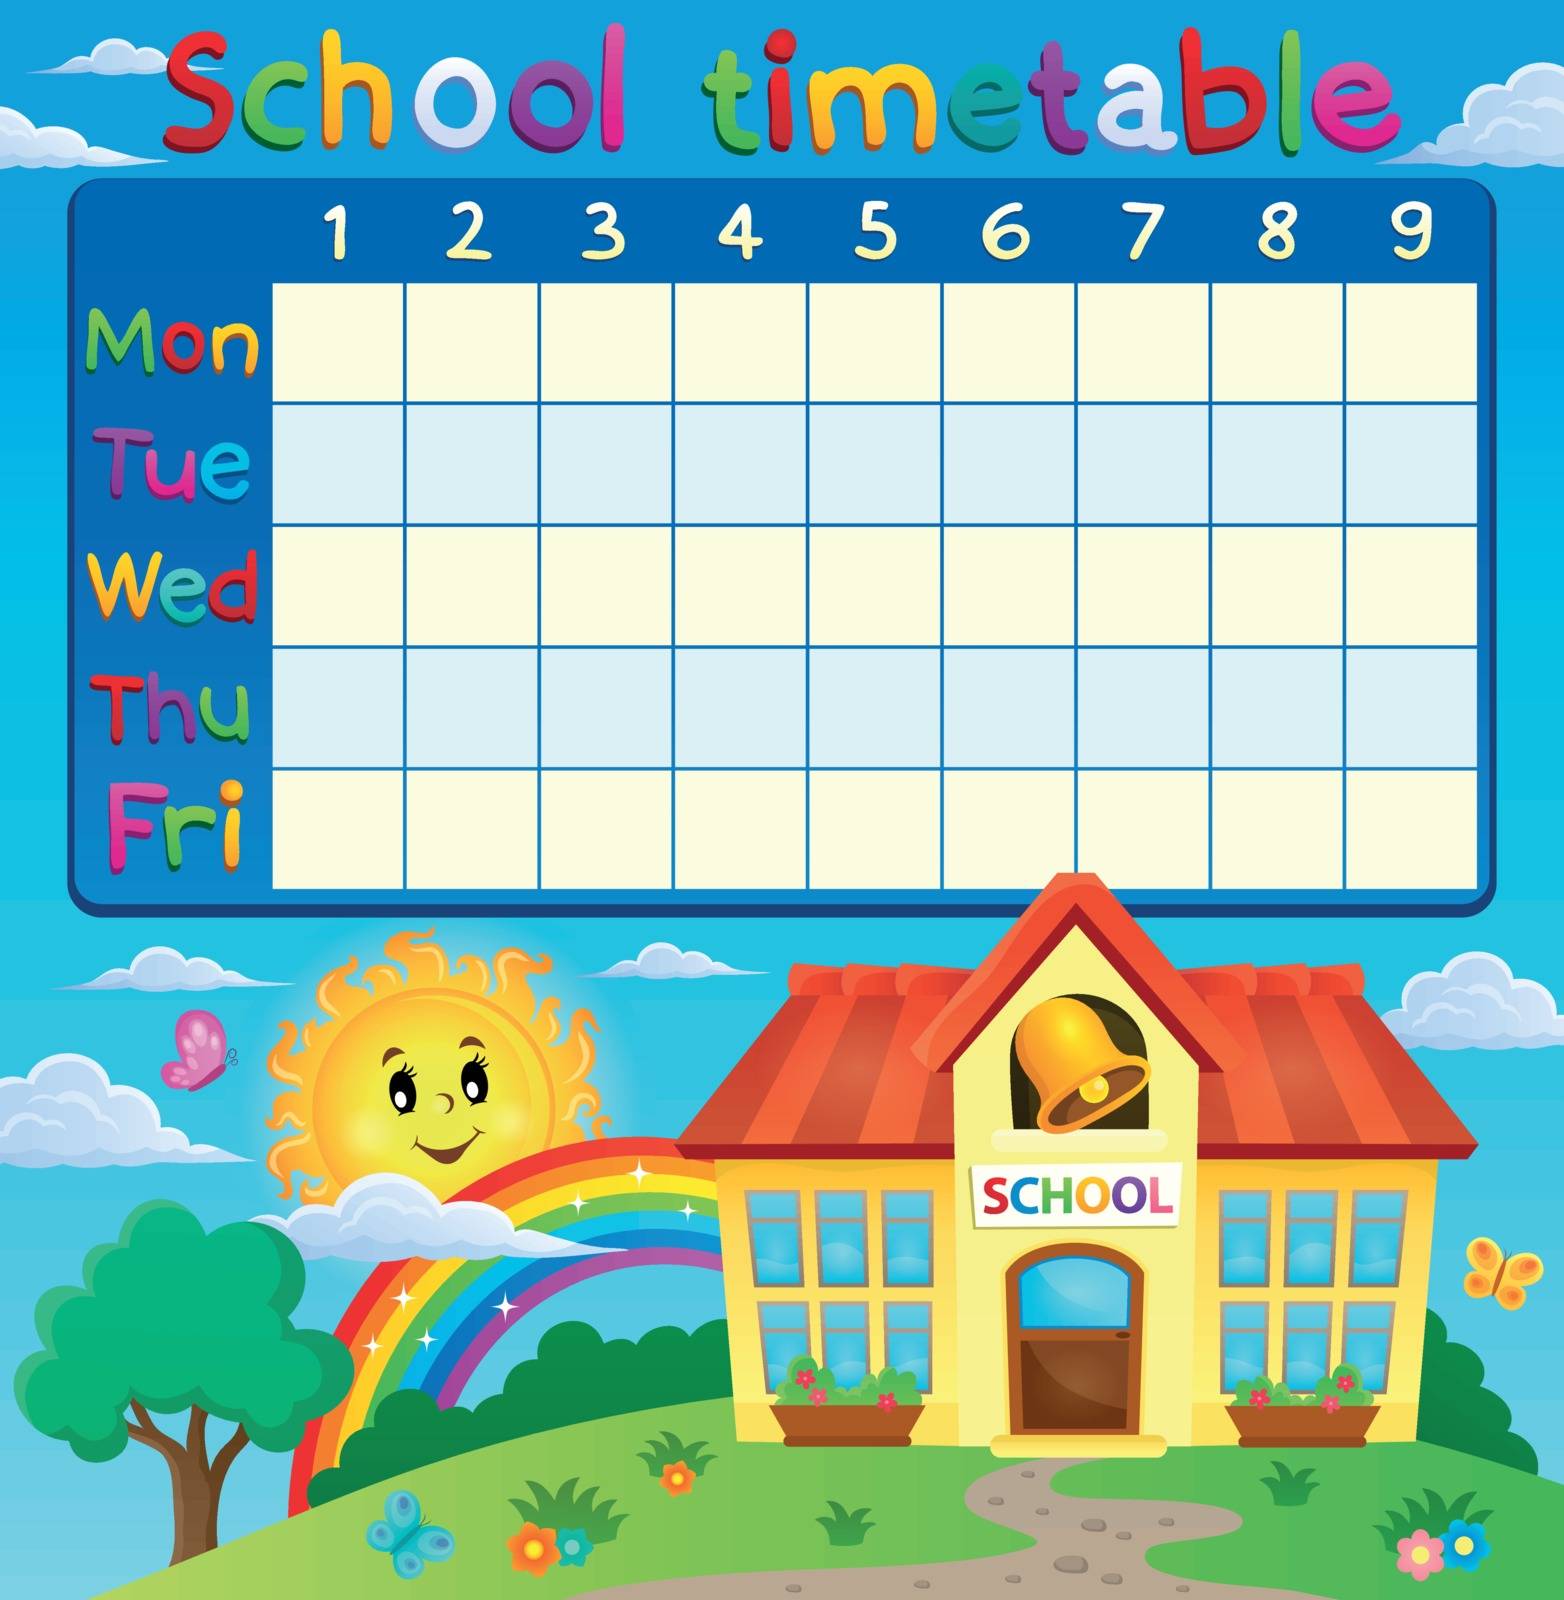 School timetable with school building - eps10 vector illustration.